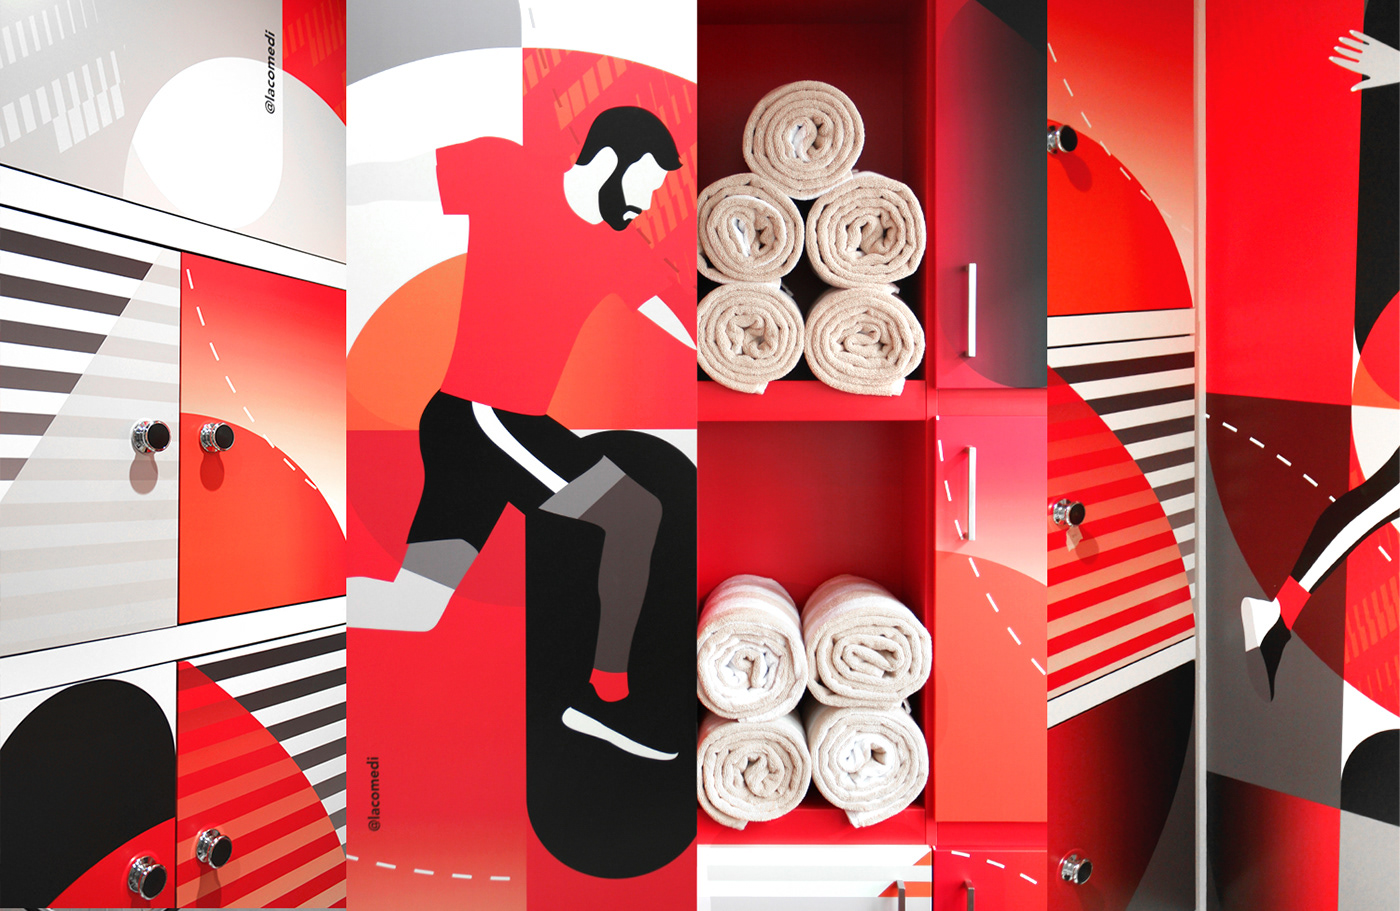 abstract abstractart decor geometric hotel hoteldesign poster radisson red wallart